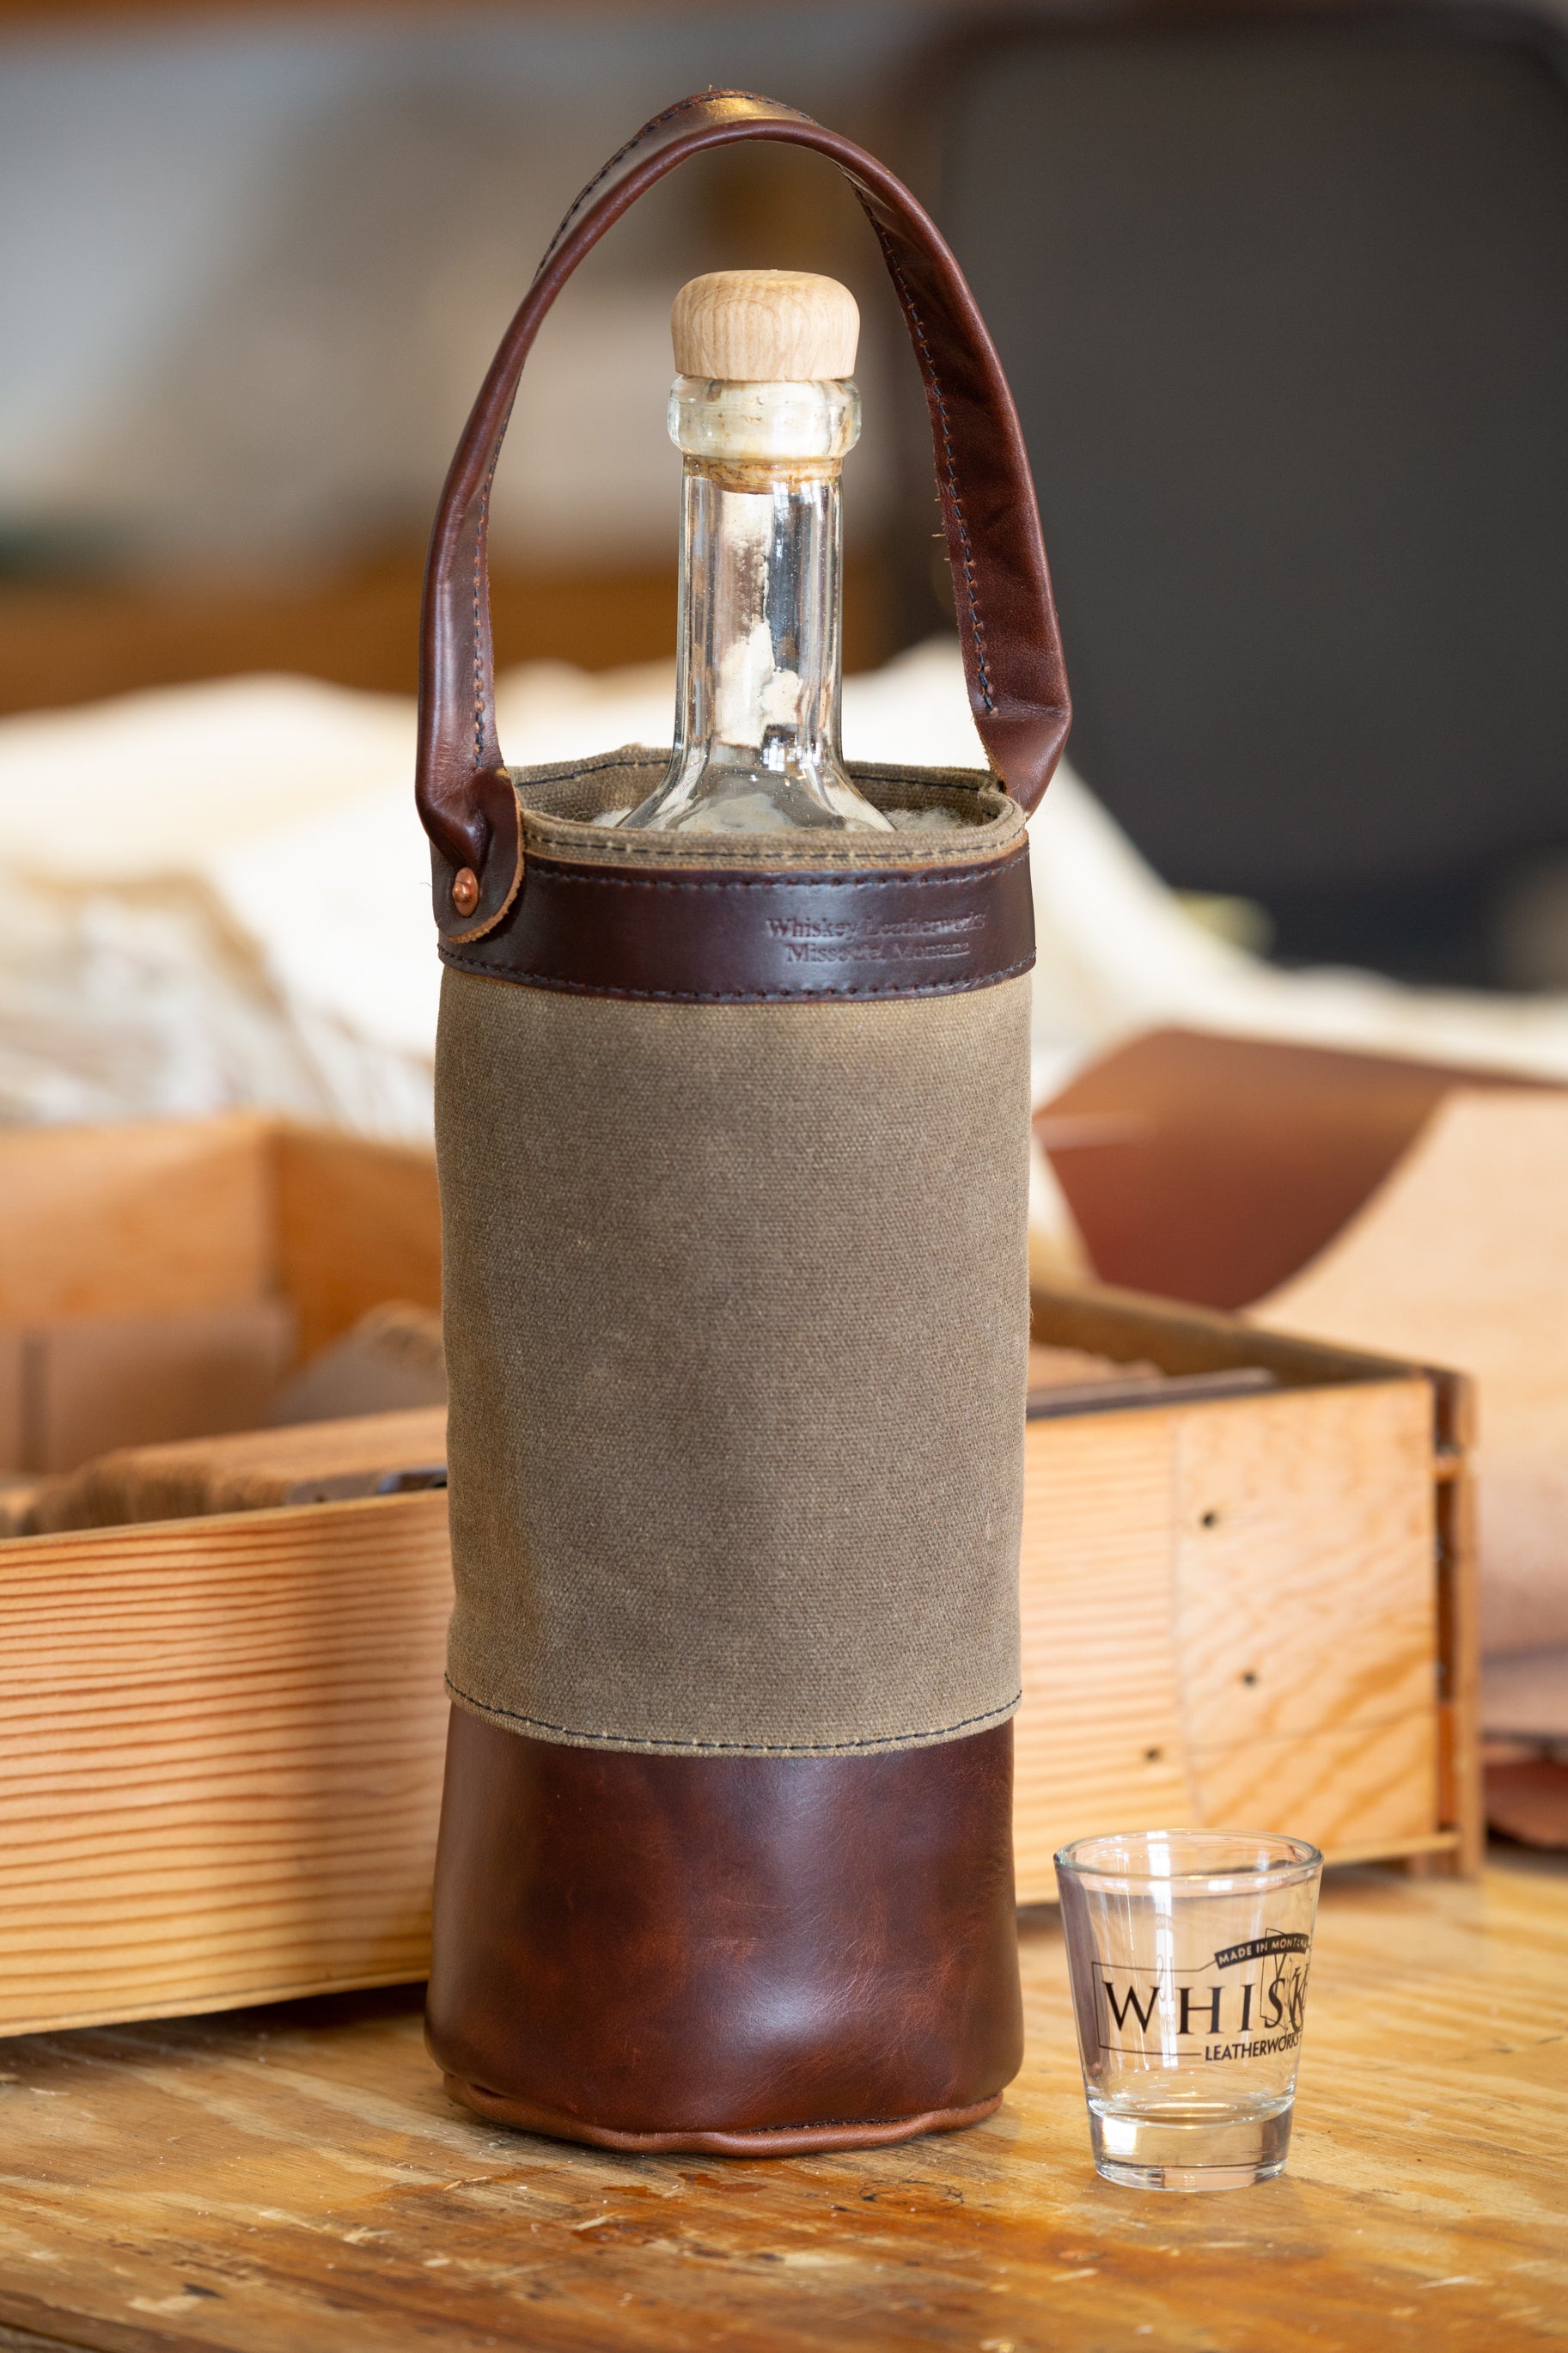 Whiskey & Wine by New Vintage Handbags